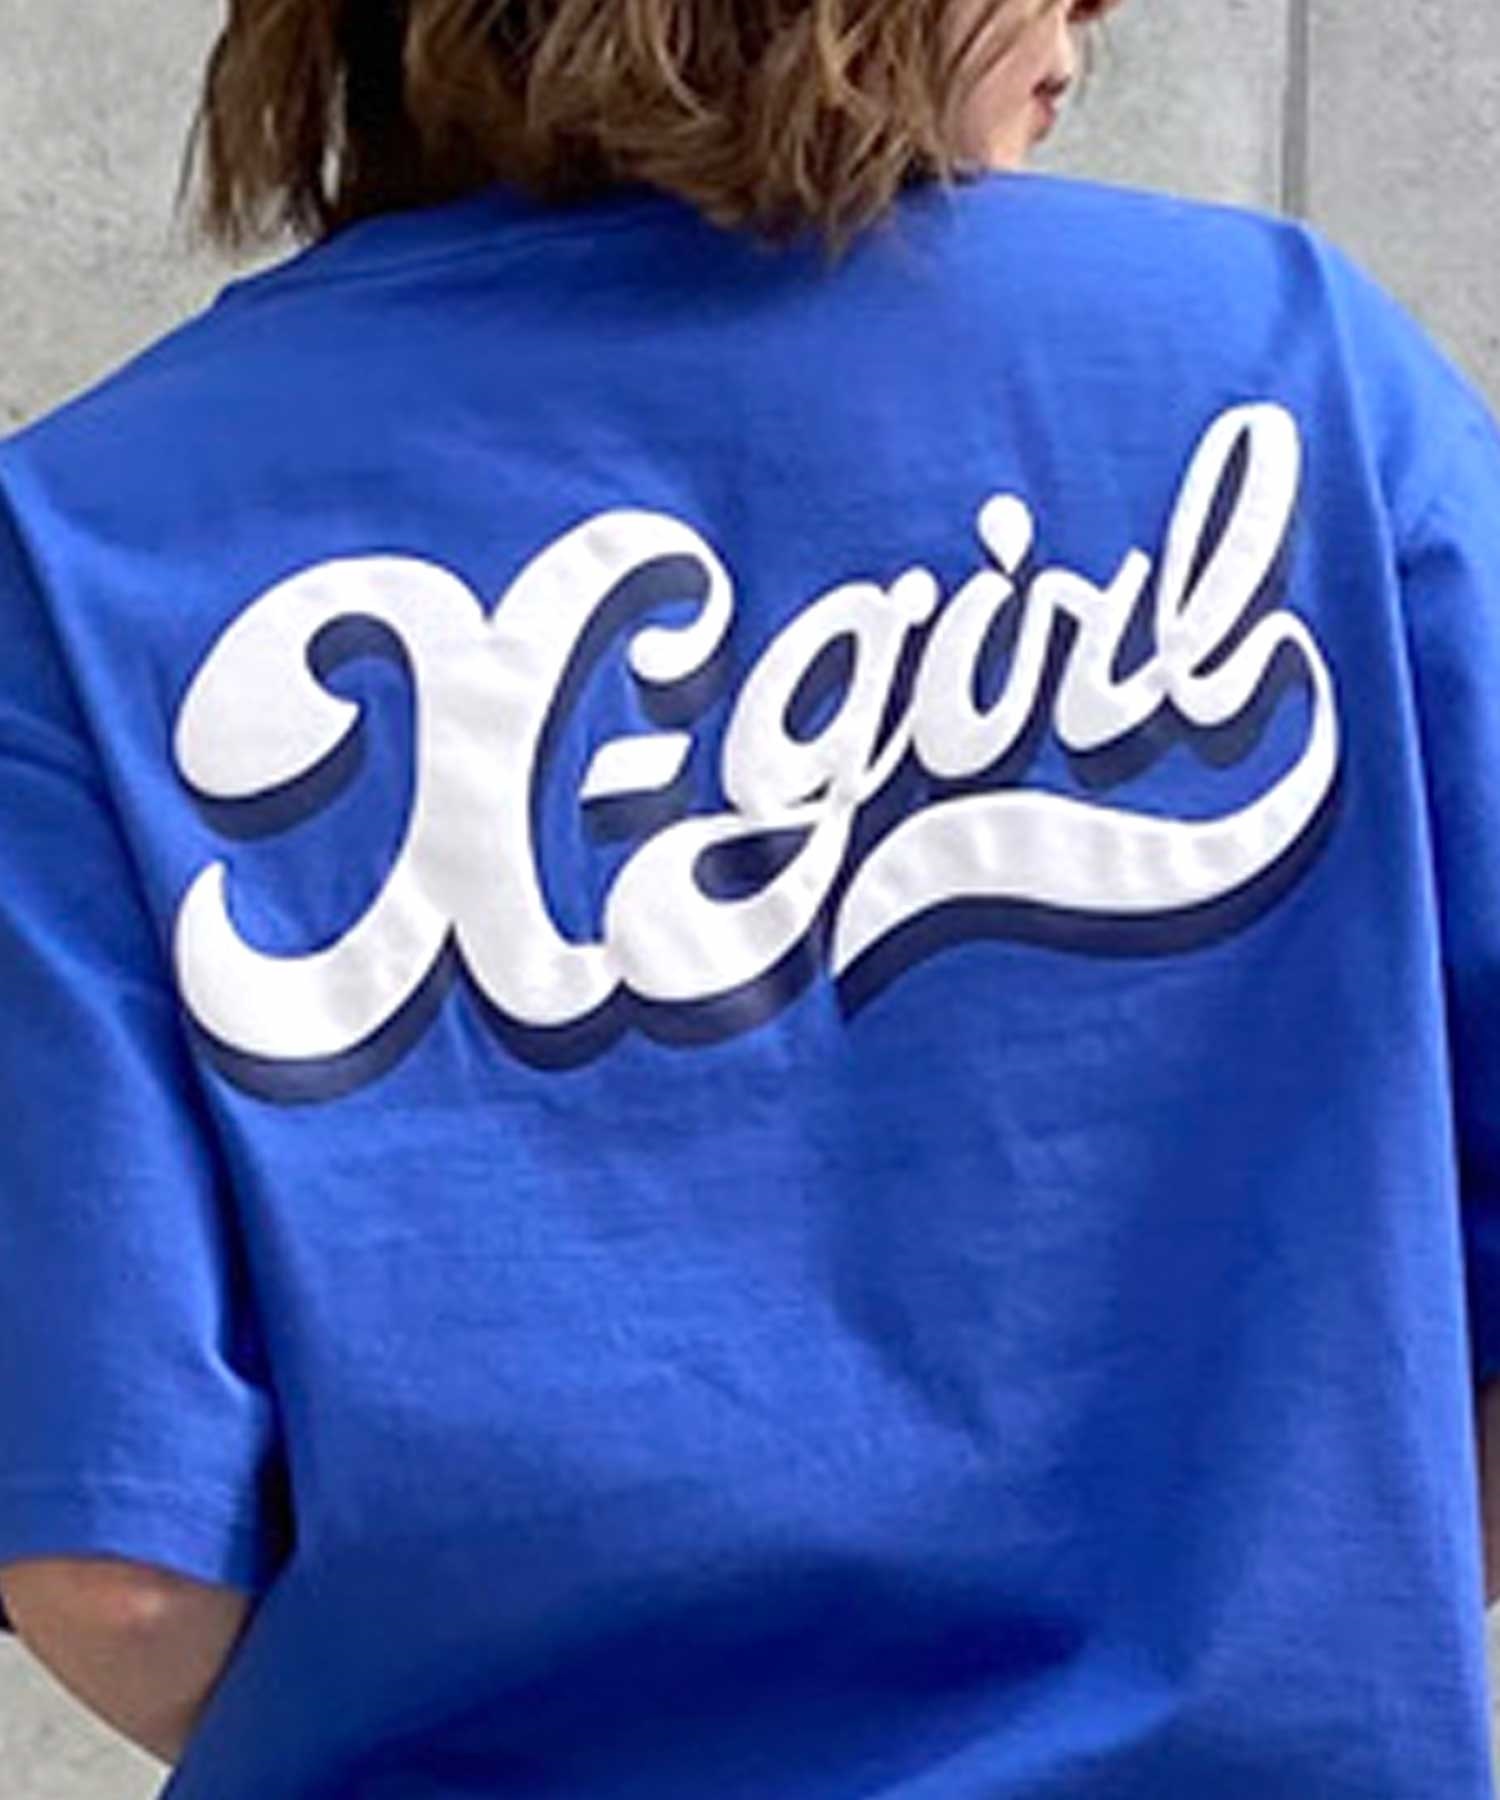 X-girl/エックスガール LETTERING LOGO SS TEE 105242011042 レディース Tシャツ ムラサキスポーツ限定(WHITE-M)